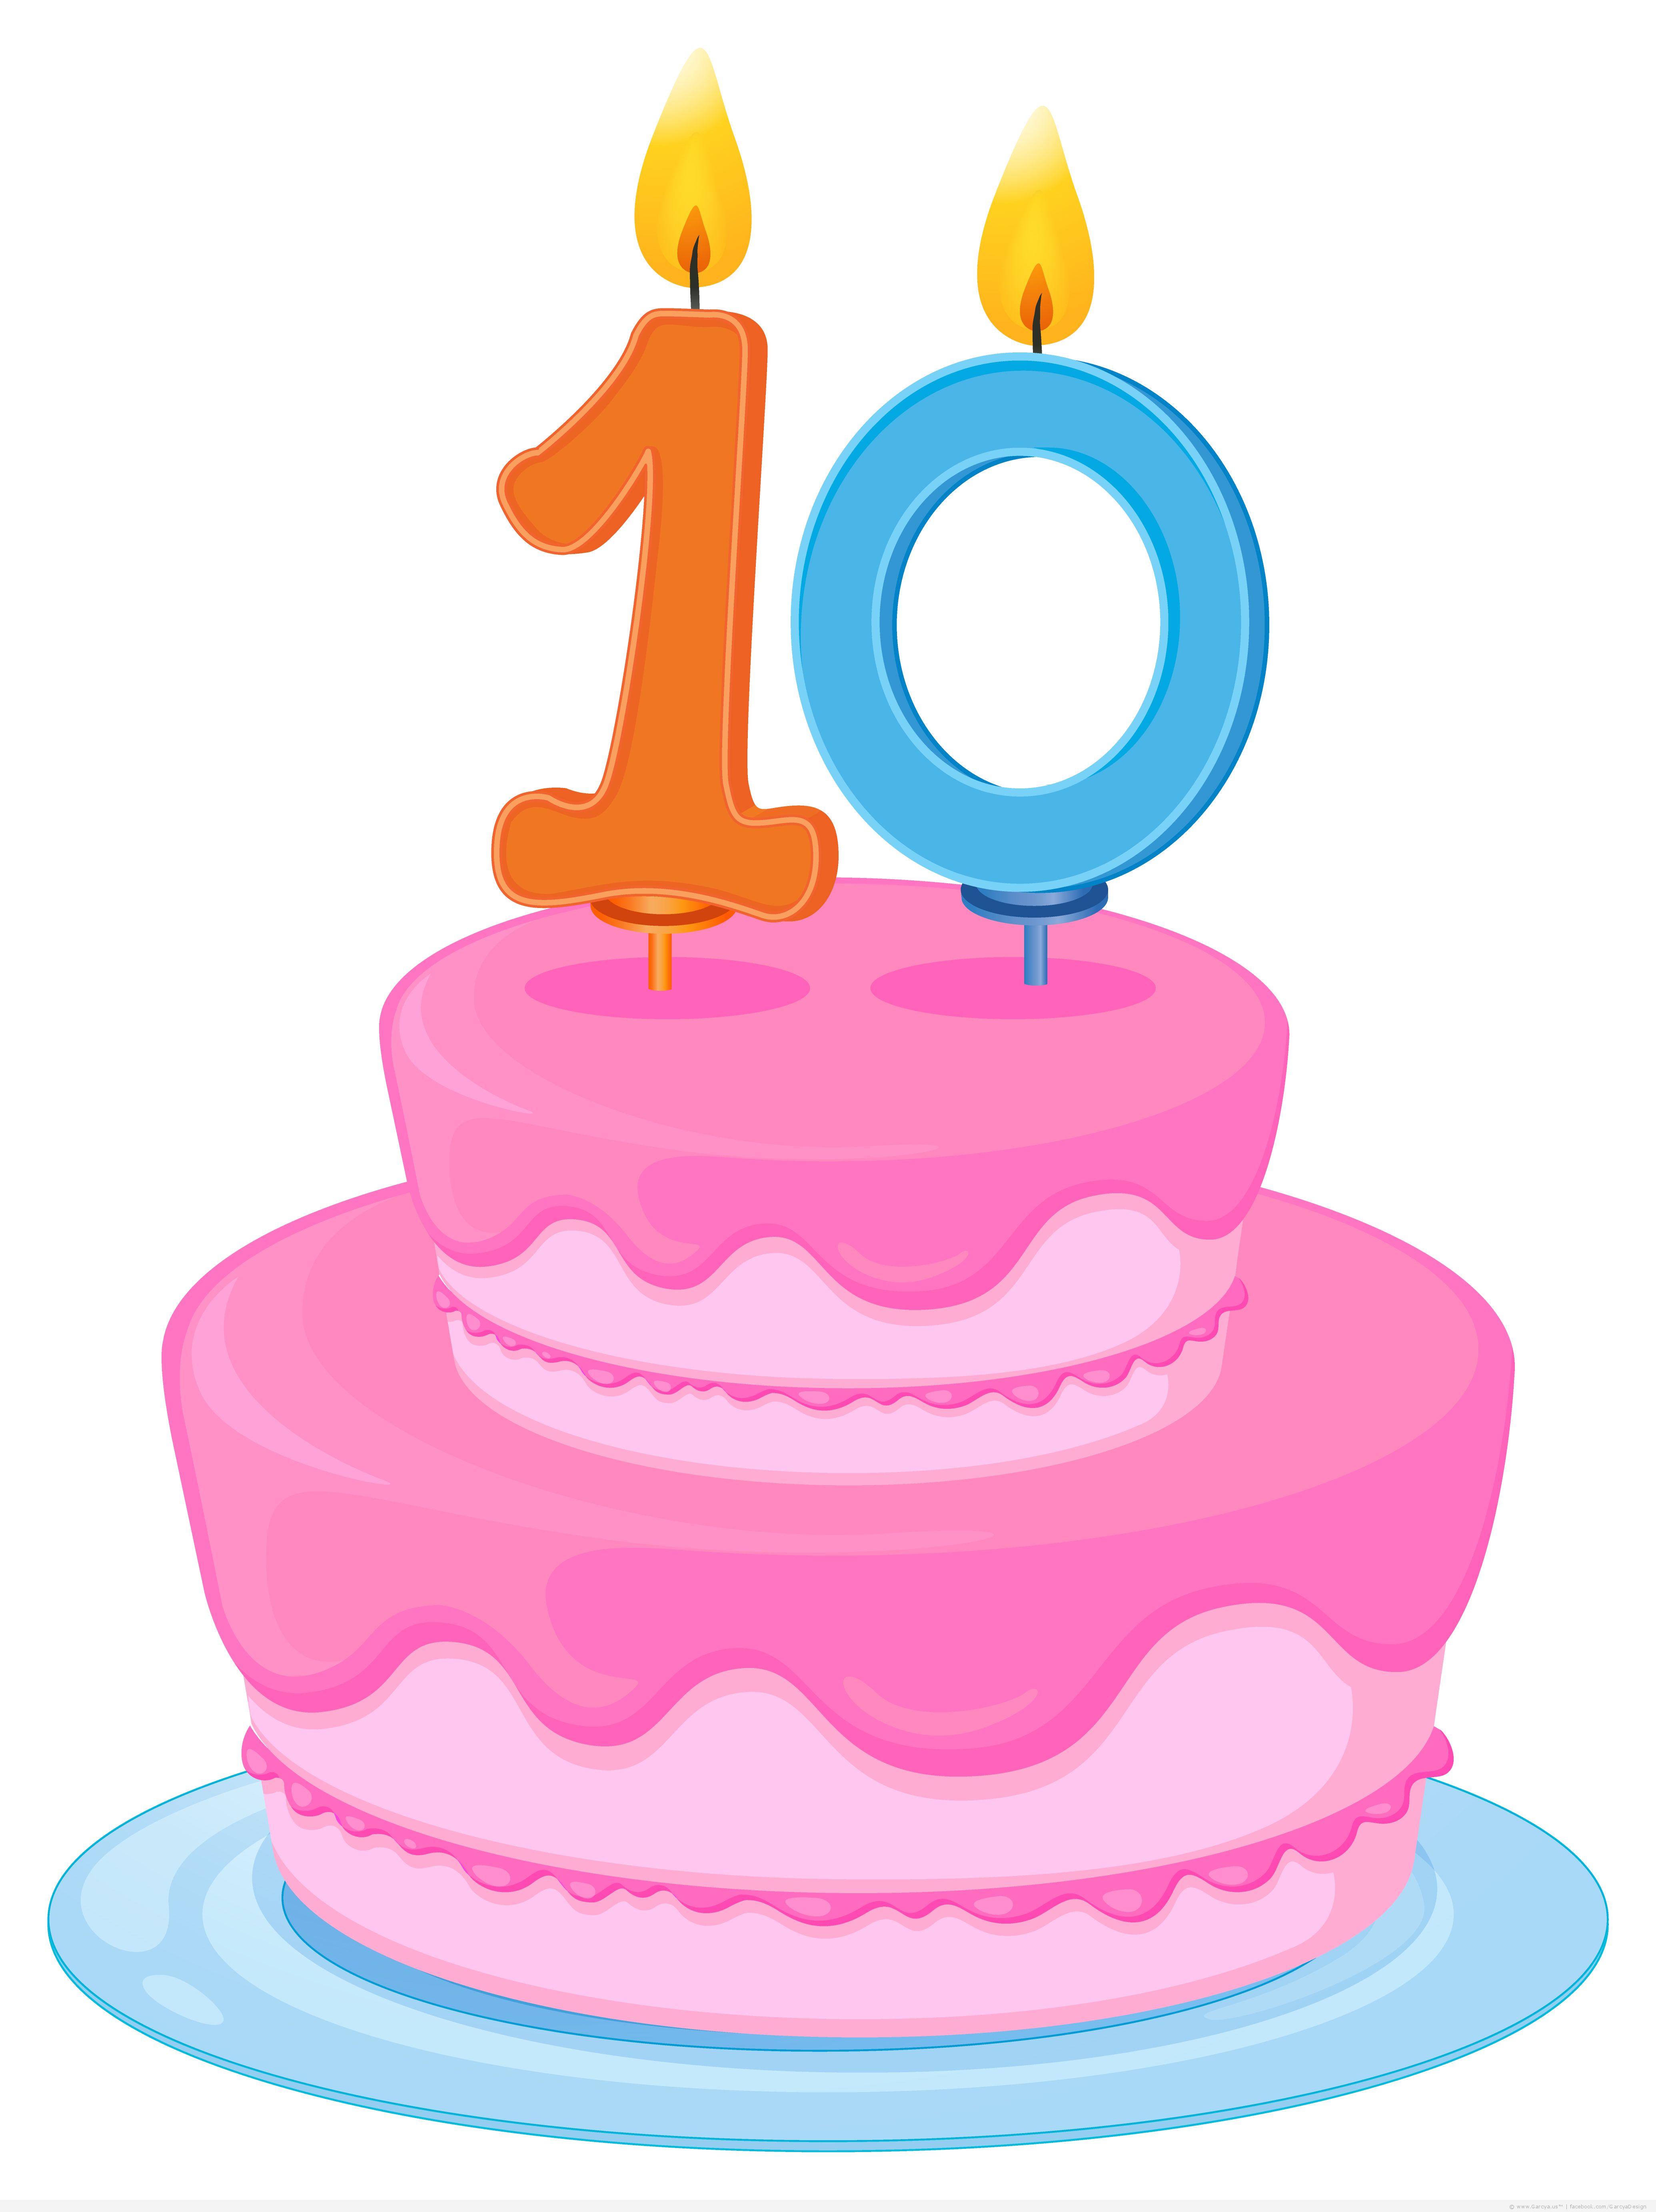 Free 10th Birthday Cake Cartoon Image Charatoon - Aria Art